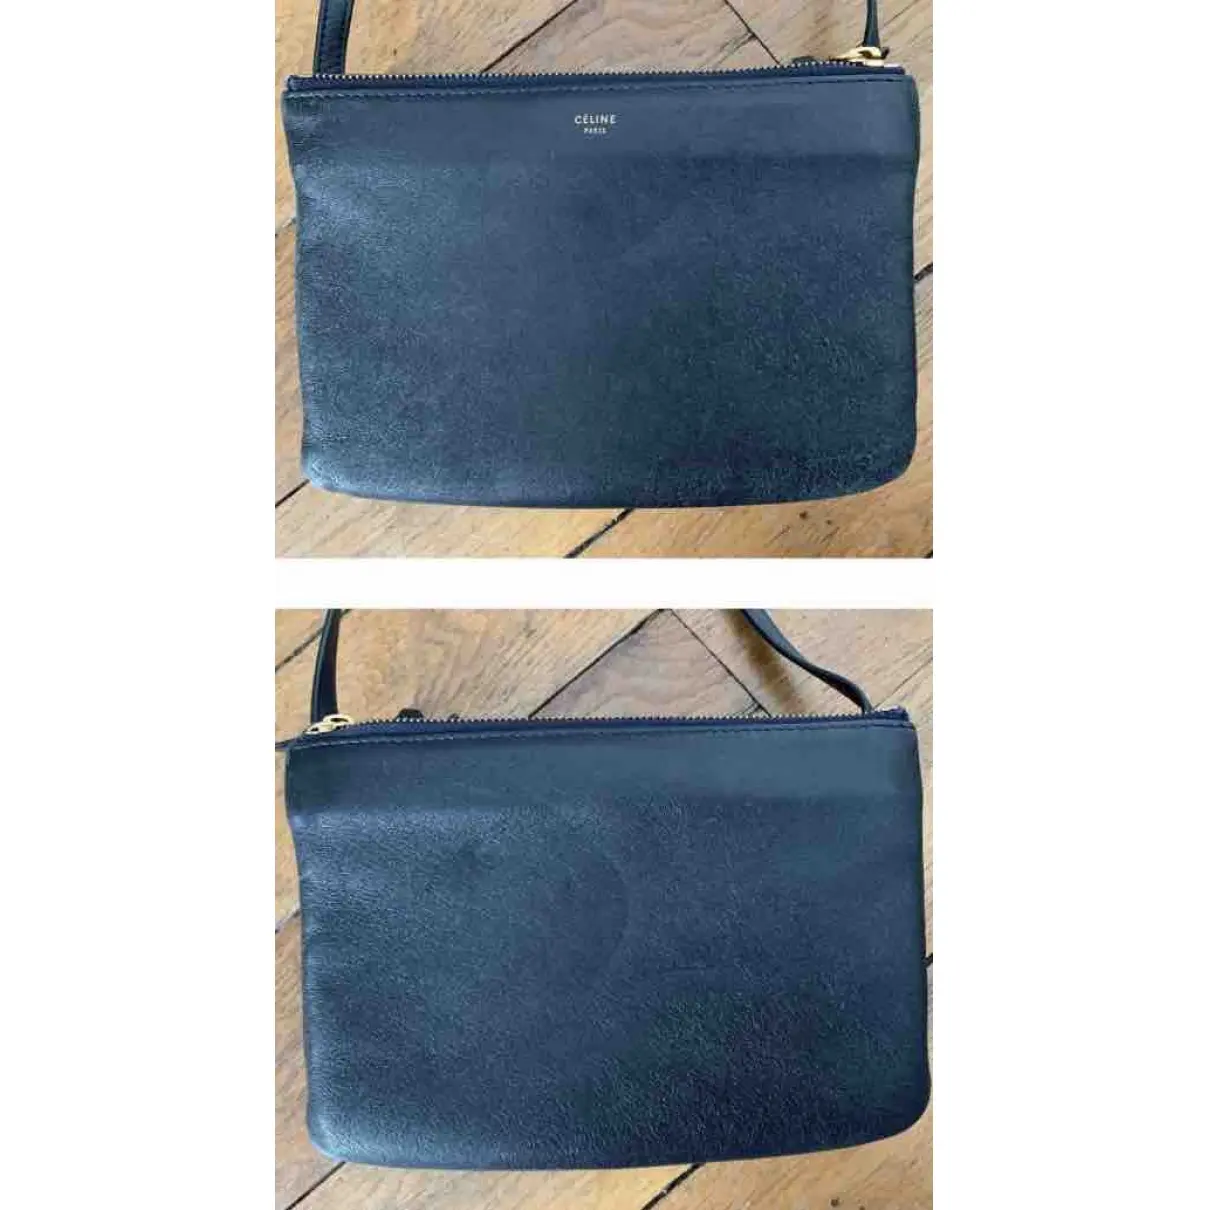 Celine Trio leather crossbody bag for sale